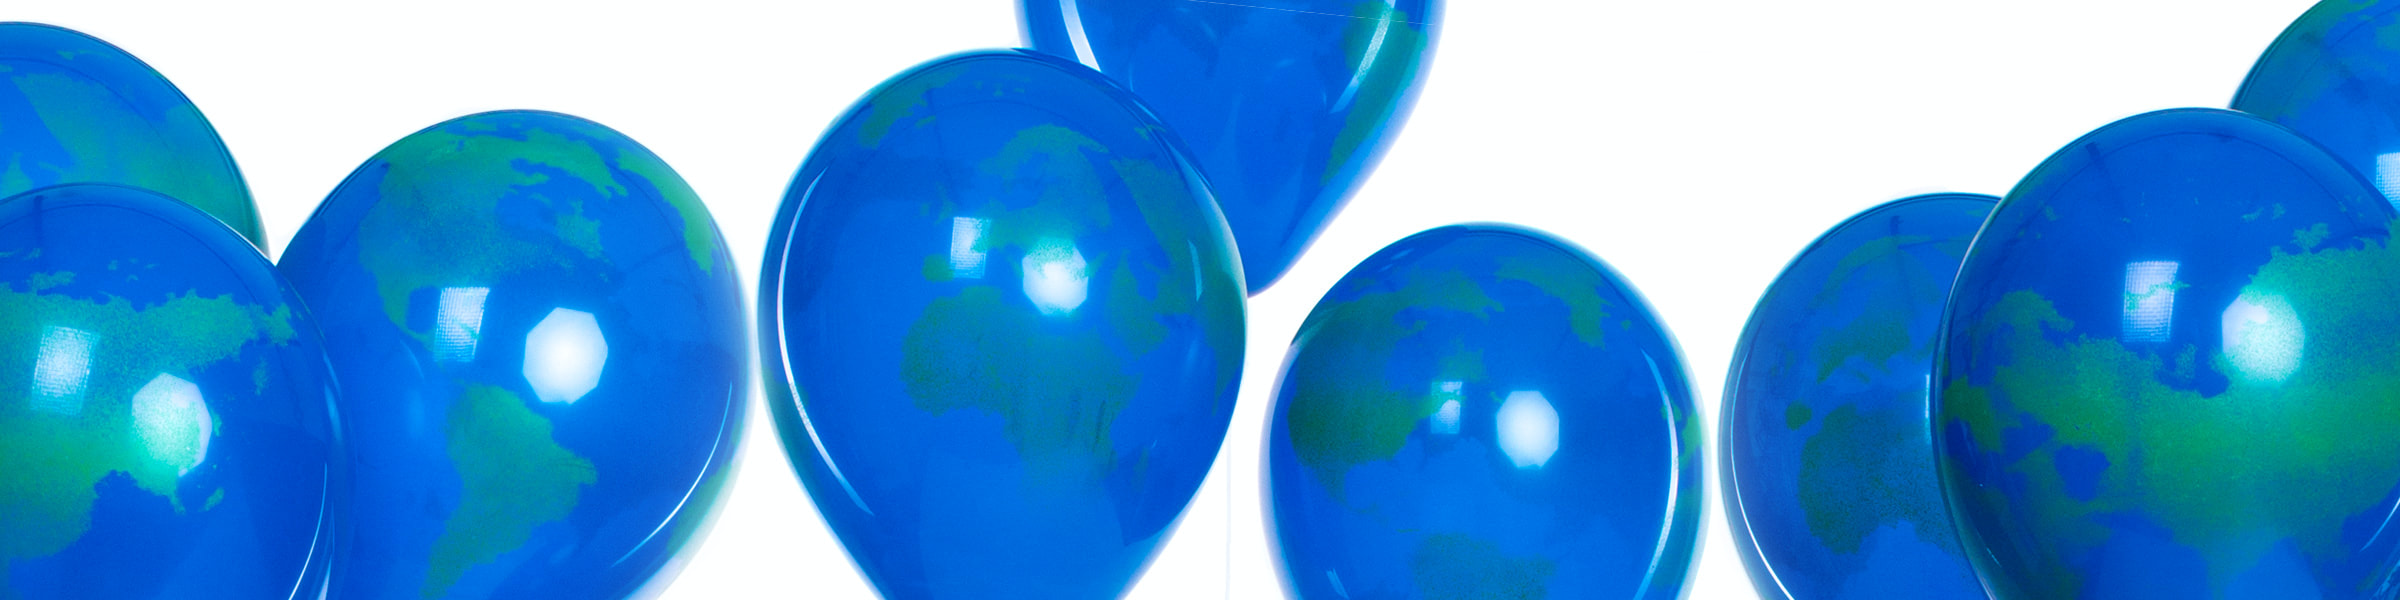 https://balloons-united.com/wp-content/uploads/balloons-united-banner-sustainability.jpg